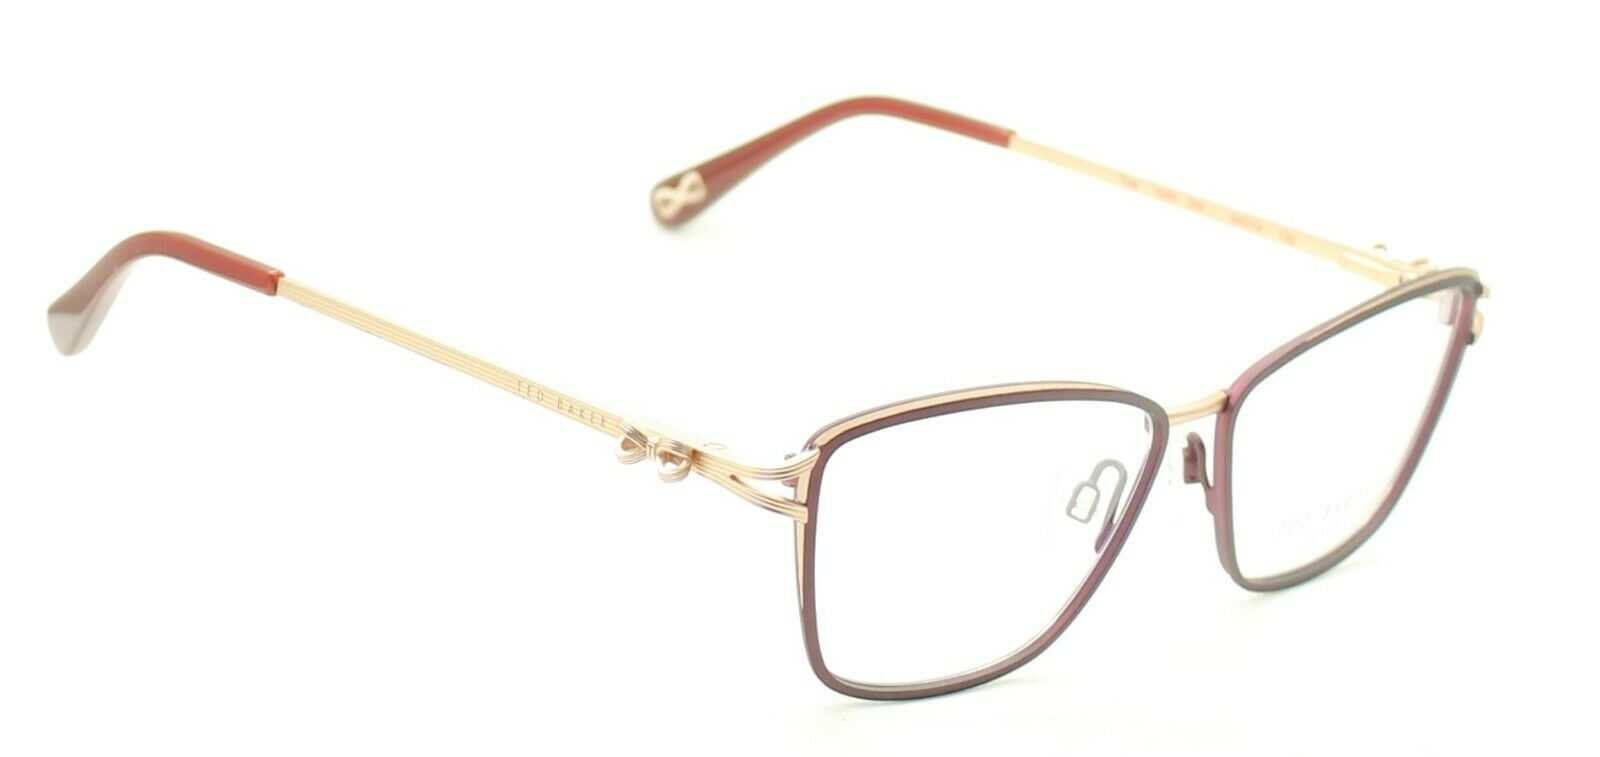 TED BAKER 2245 244 Tula 54mm  Eyewear FRAMES Glasses Eyeglasses RX Optical - New